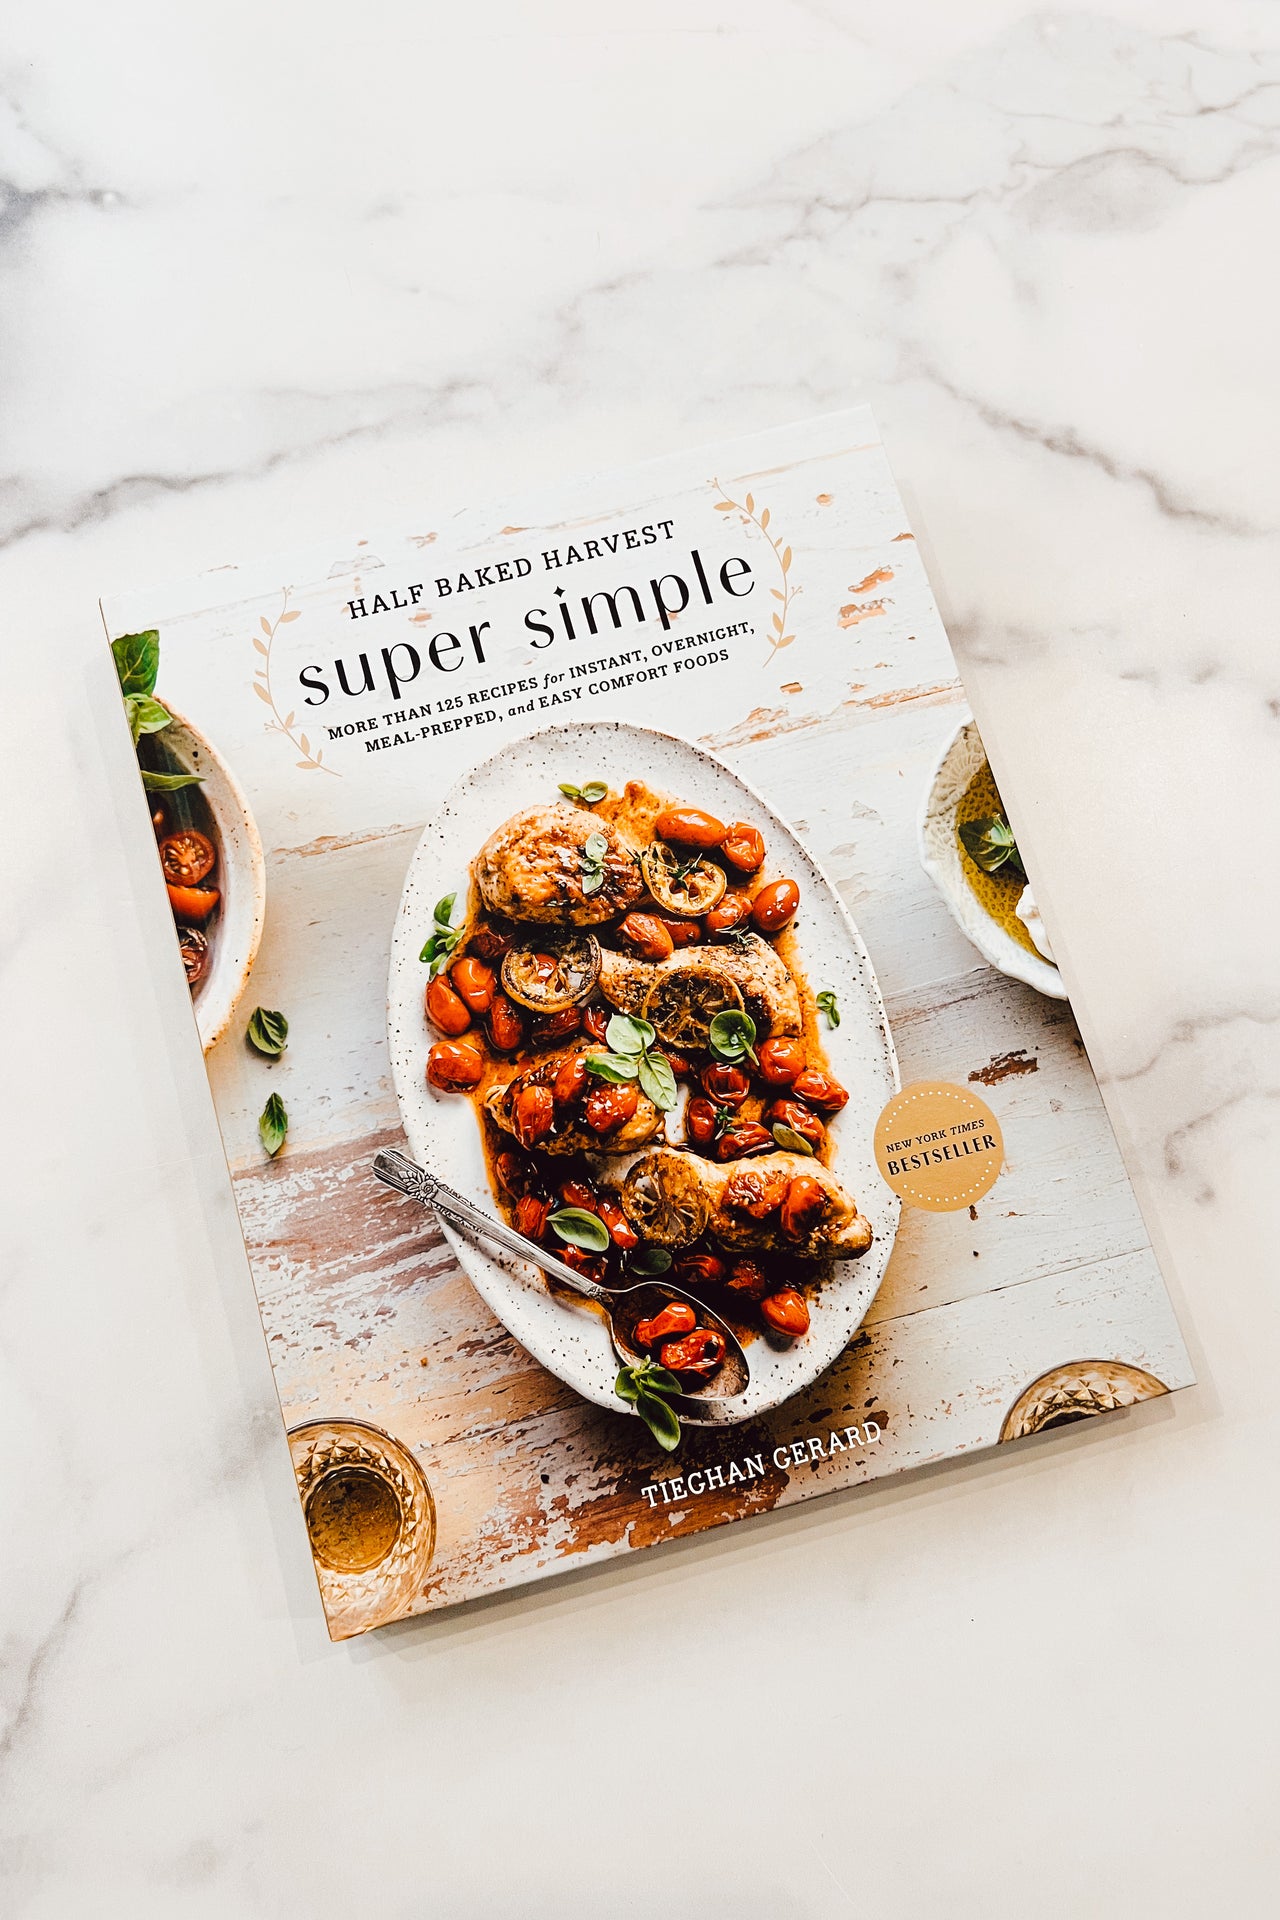 Super Simple Half Baked Harvest Cookbook